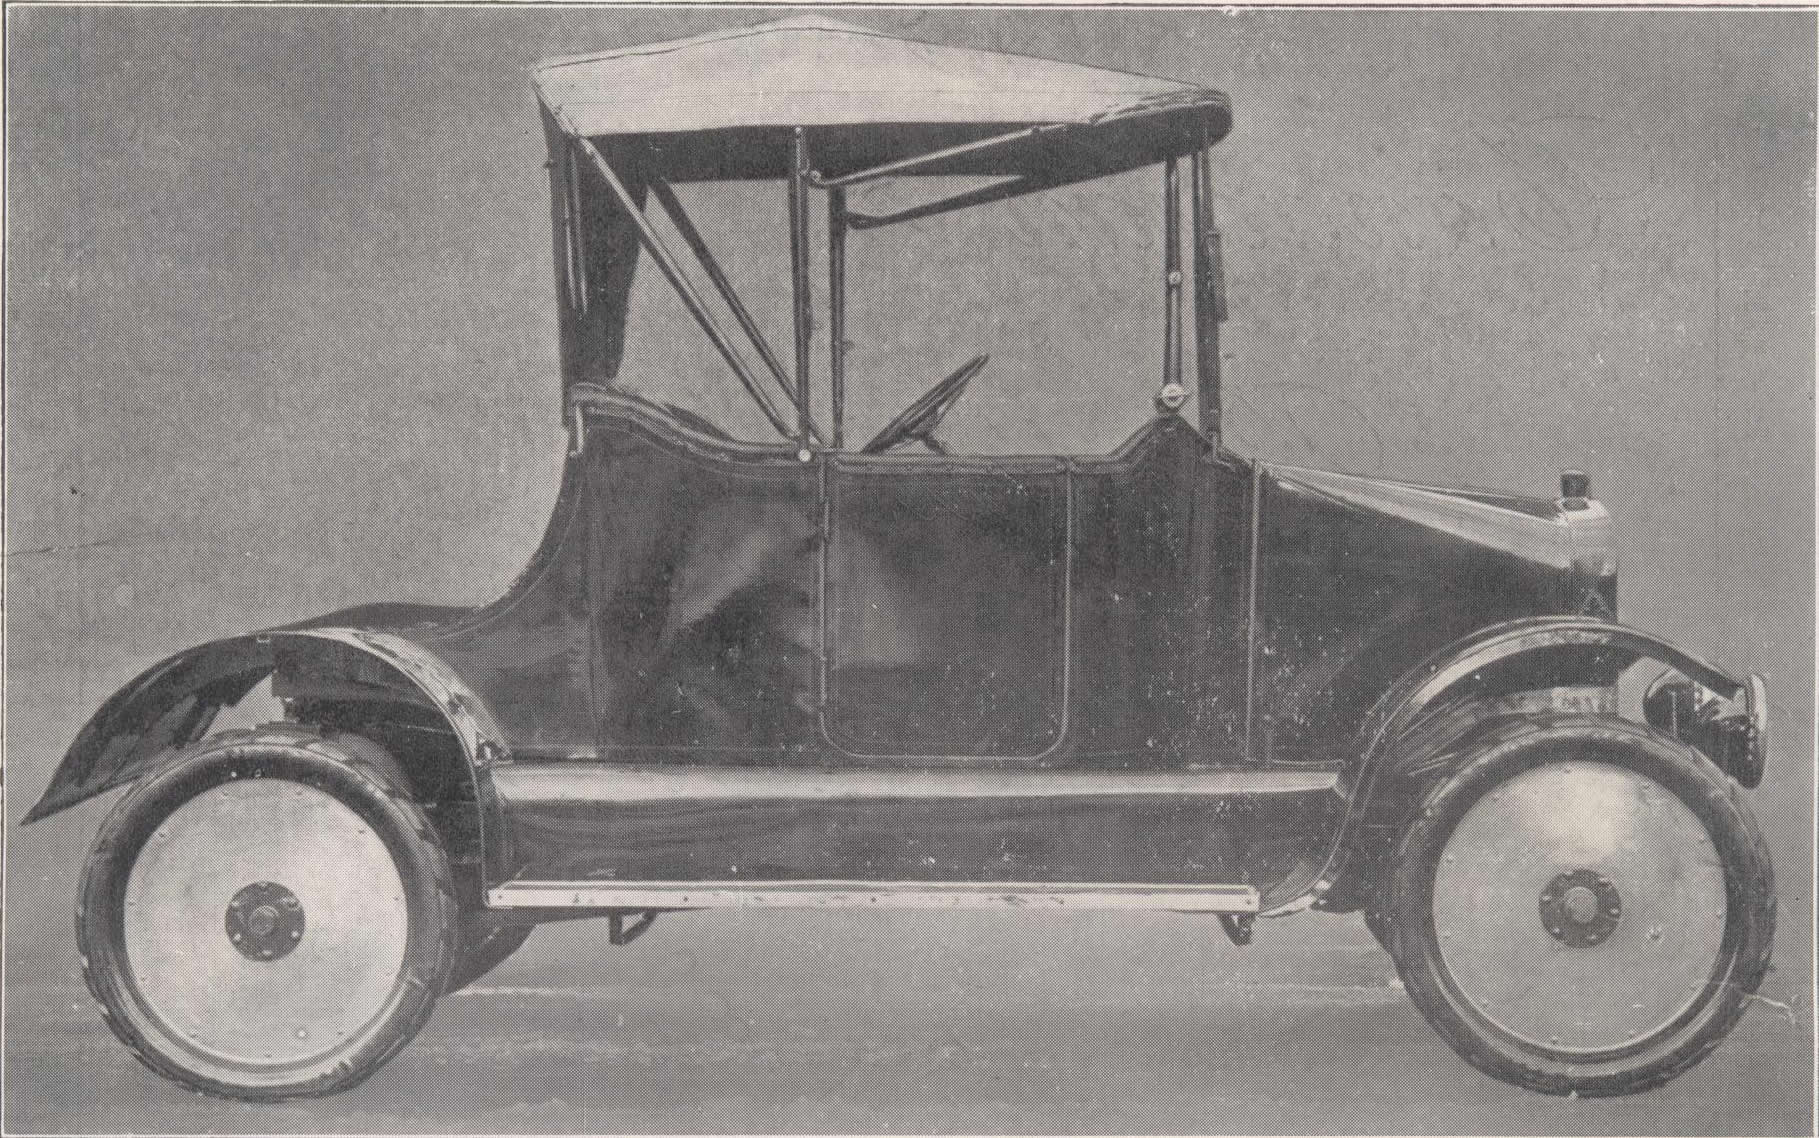 1915 Bartlett-02